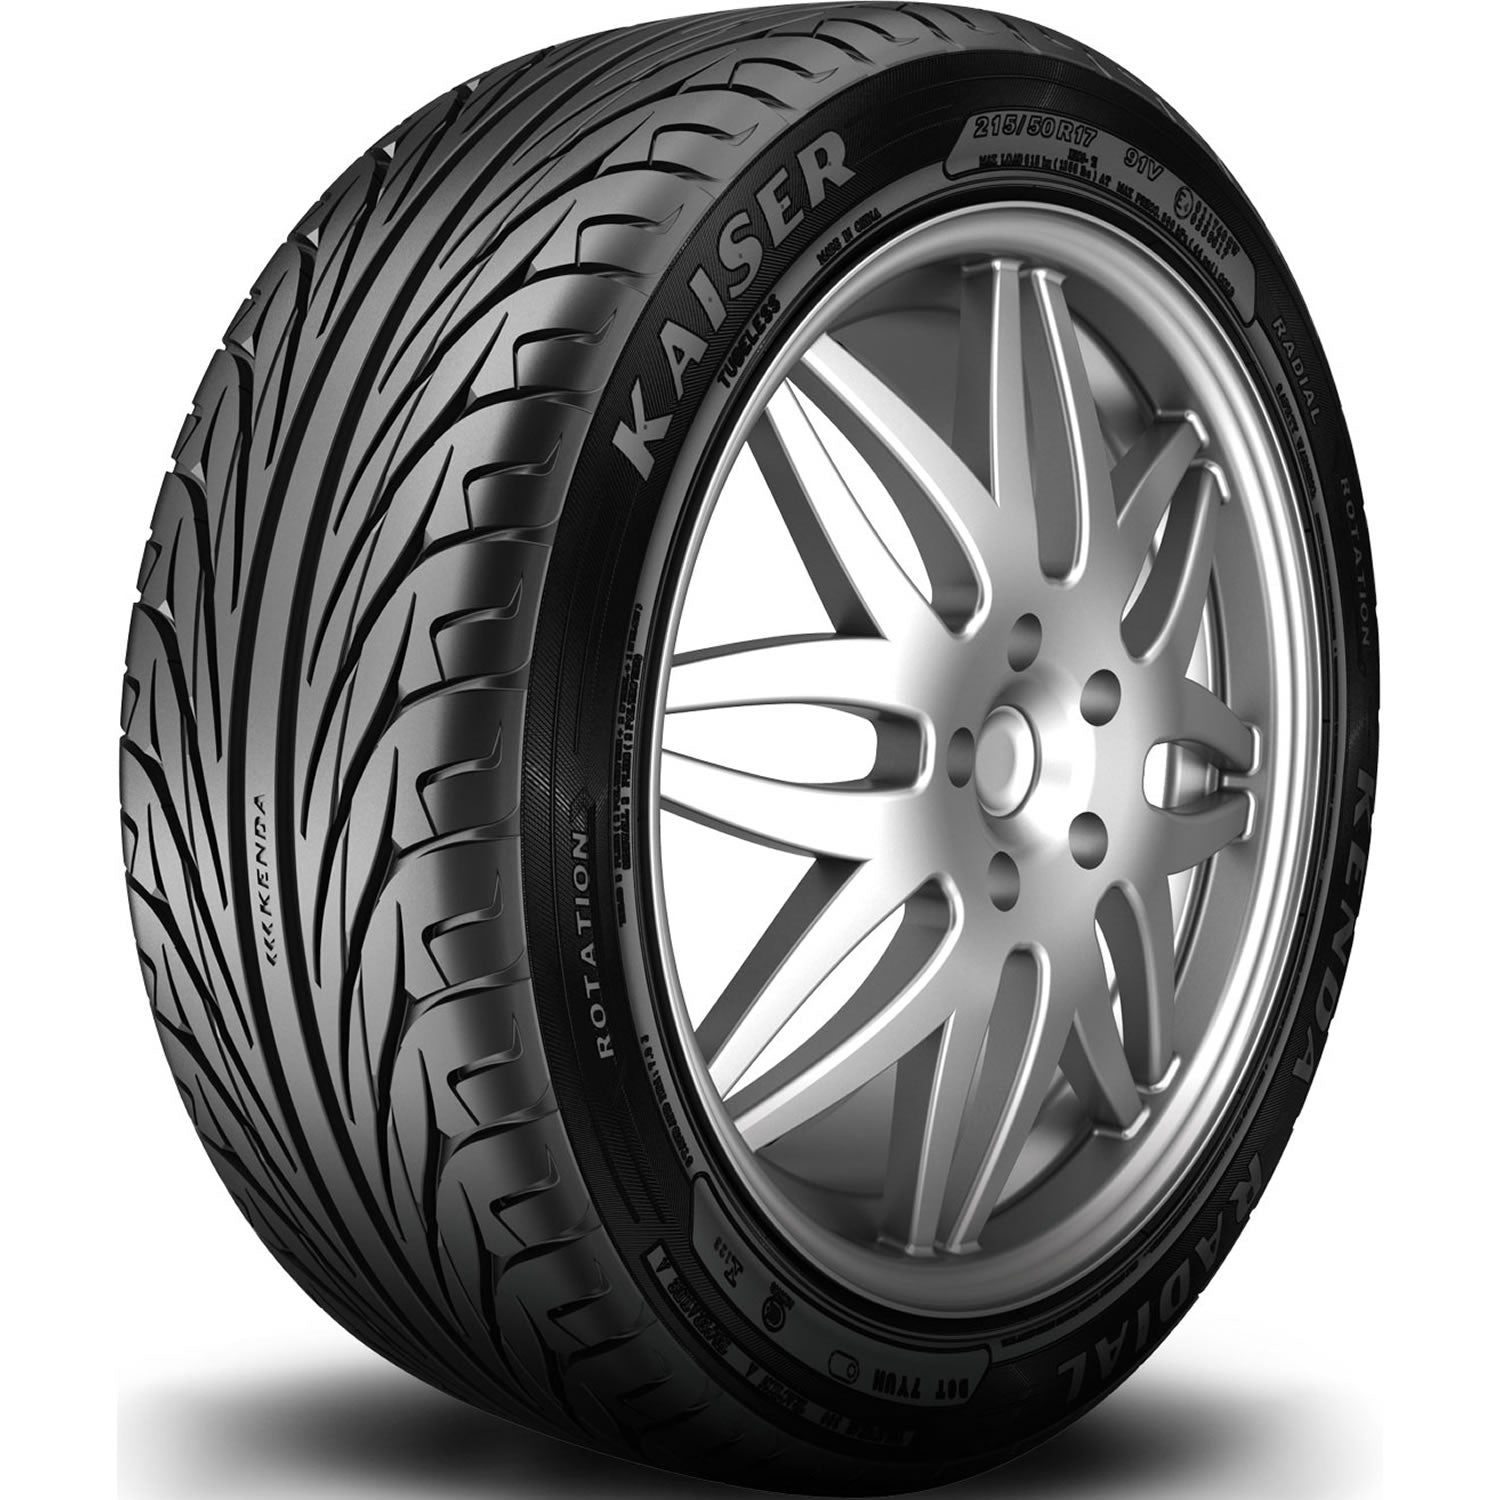 KENDA KAISER 205/40ZR17 (23.5X8.5R 17) Tires